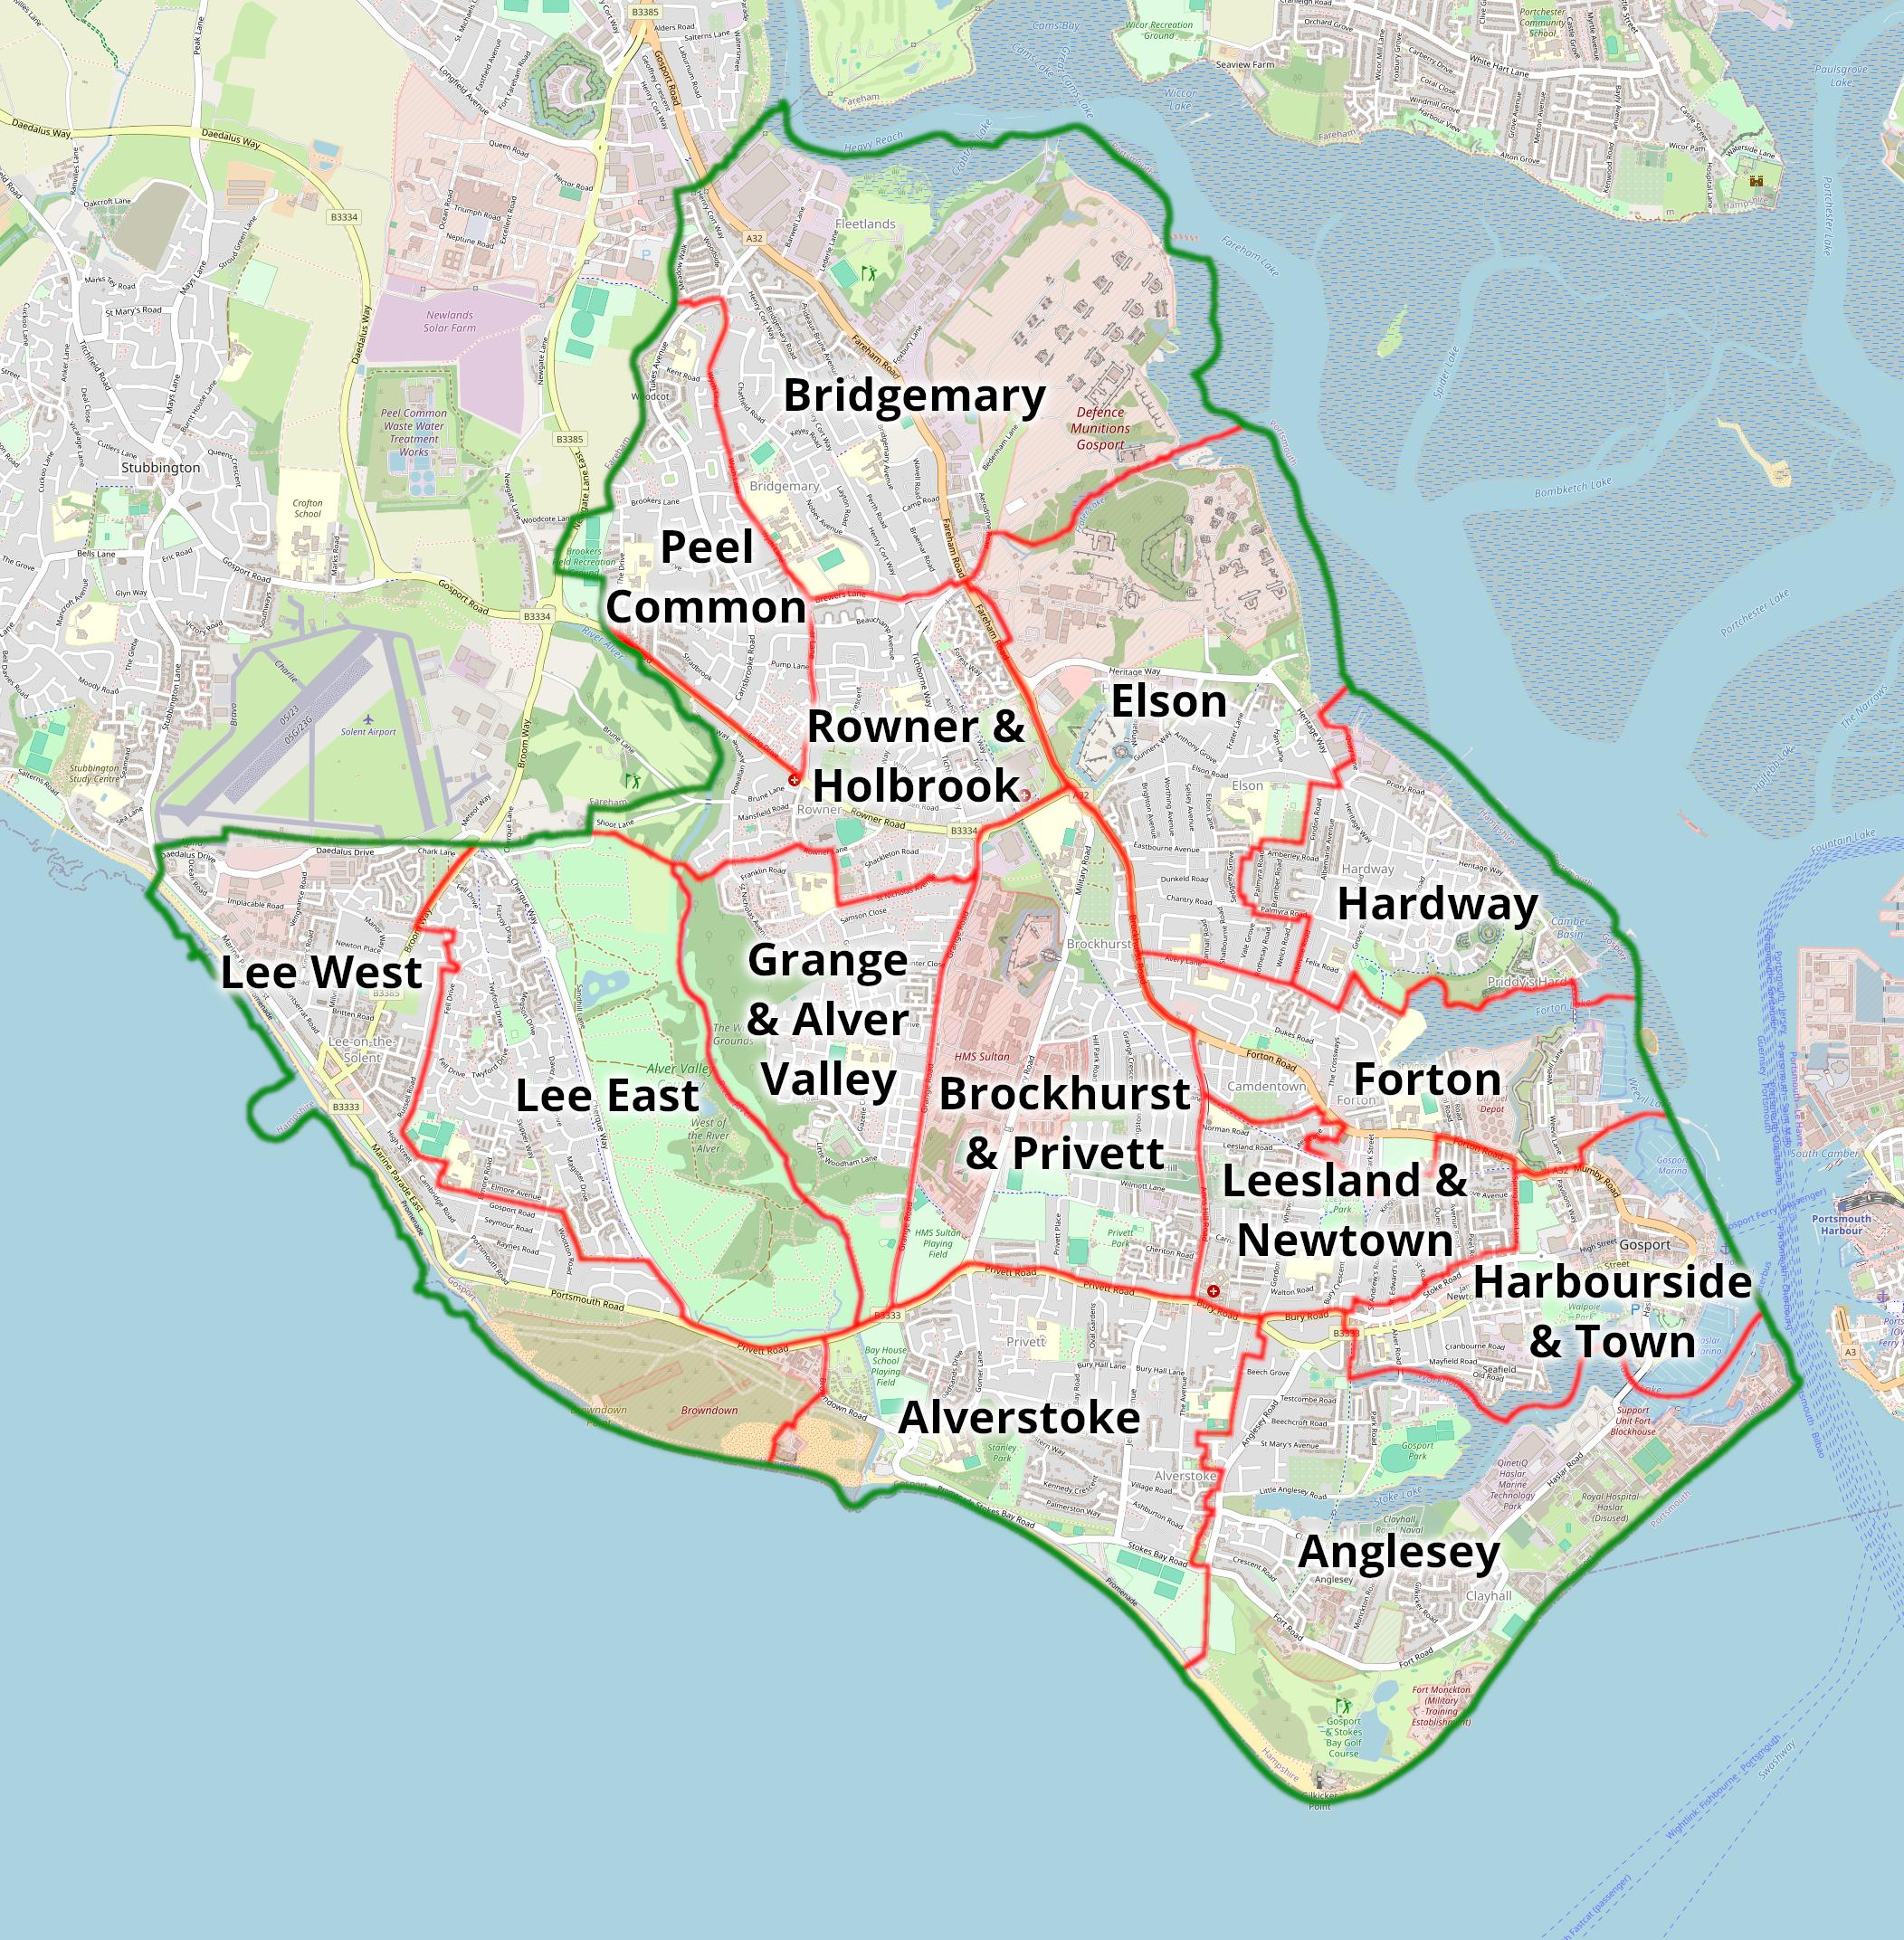 A map of Gosport showing ward boundaries